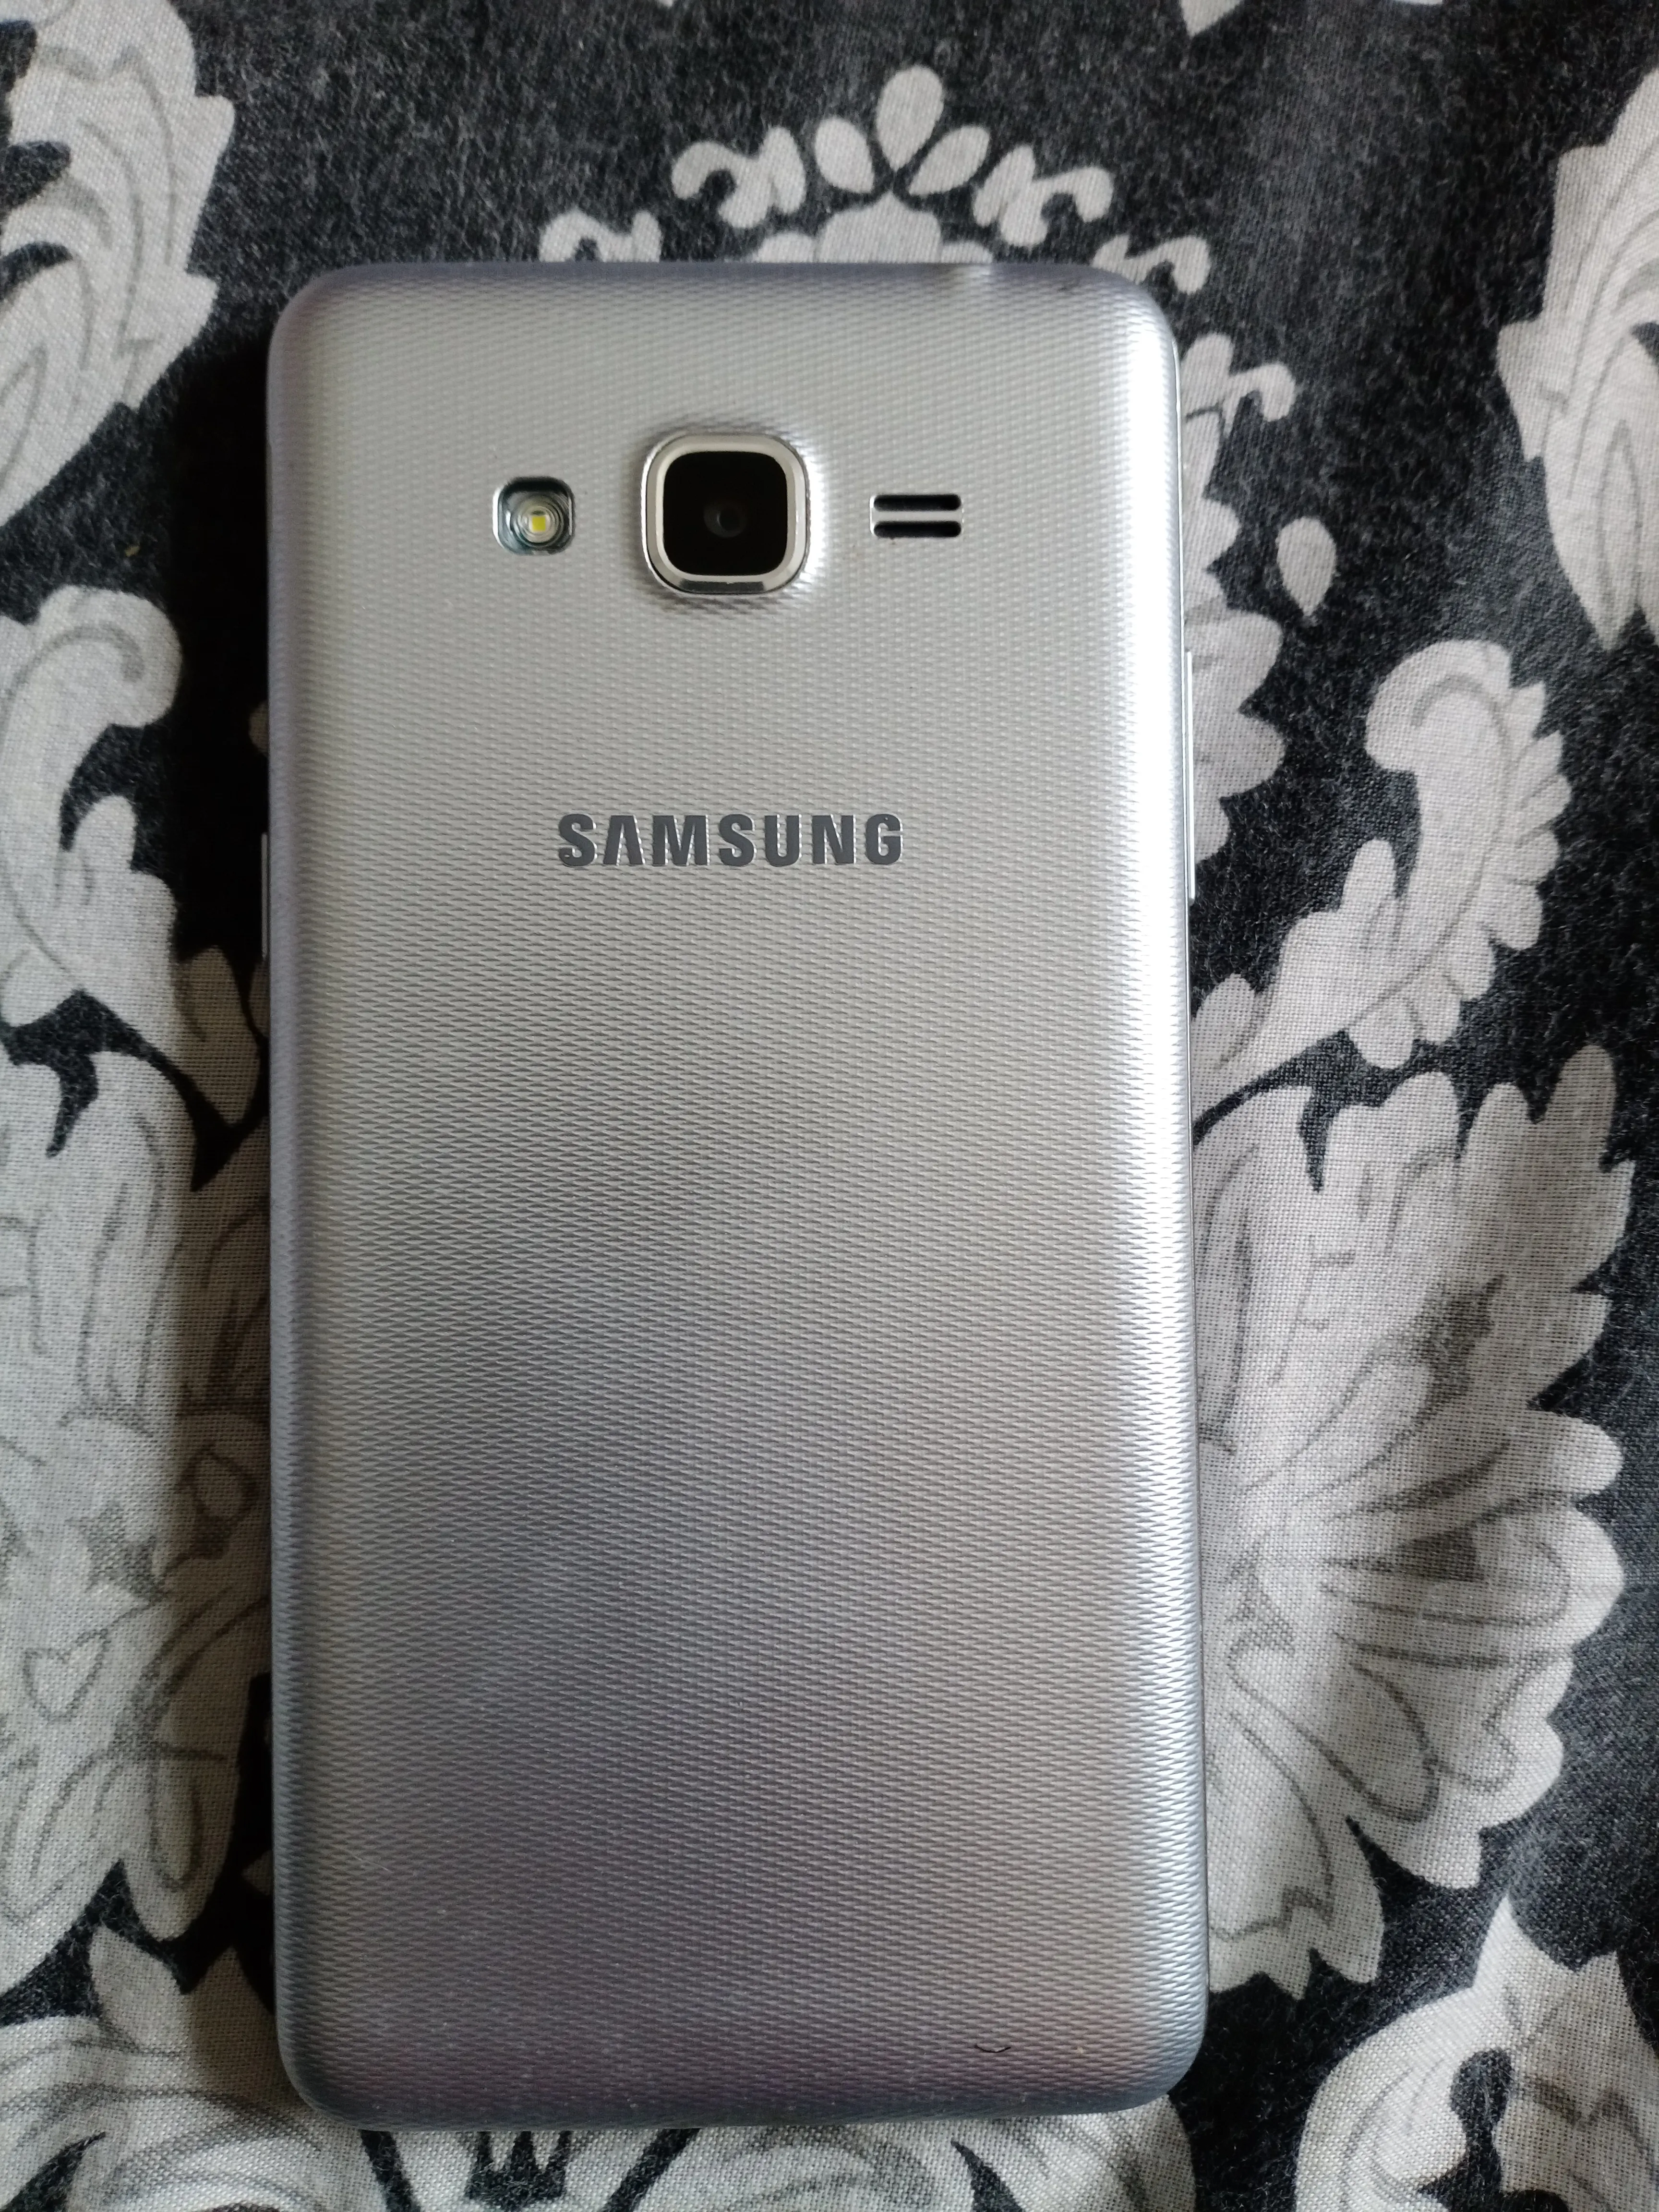 Samsung Galaxy Grand Prime Plus - photo 1